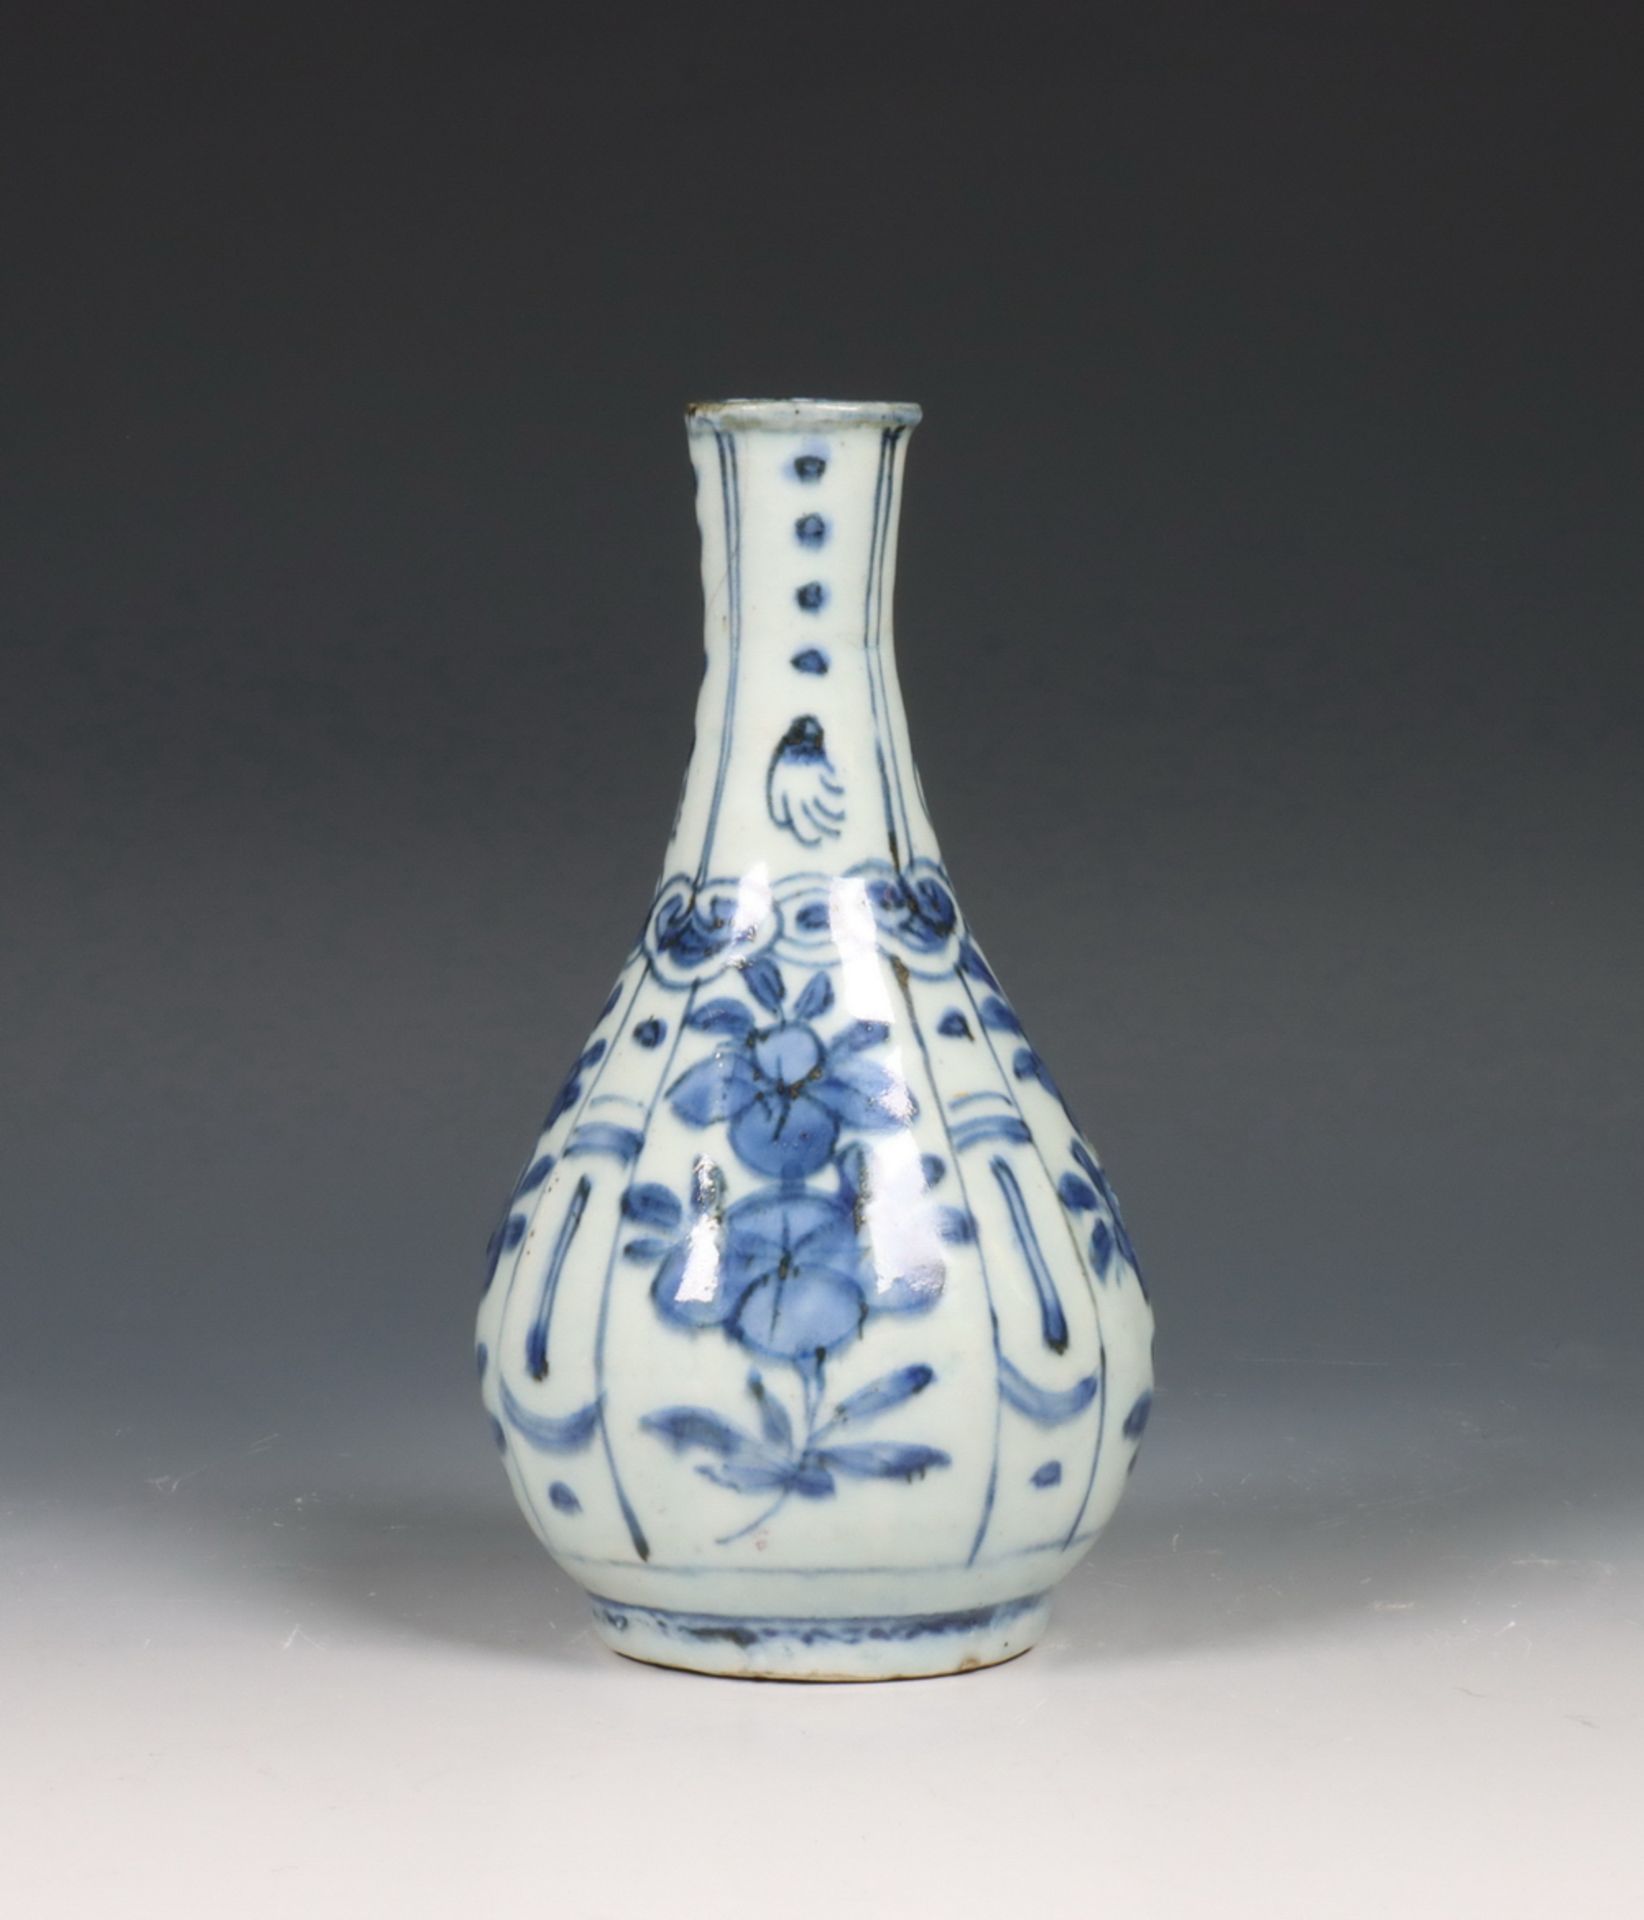 China, blauw-wit 'kraakporseleinen' vaasje, Wanli periode (1572-1620),